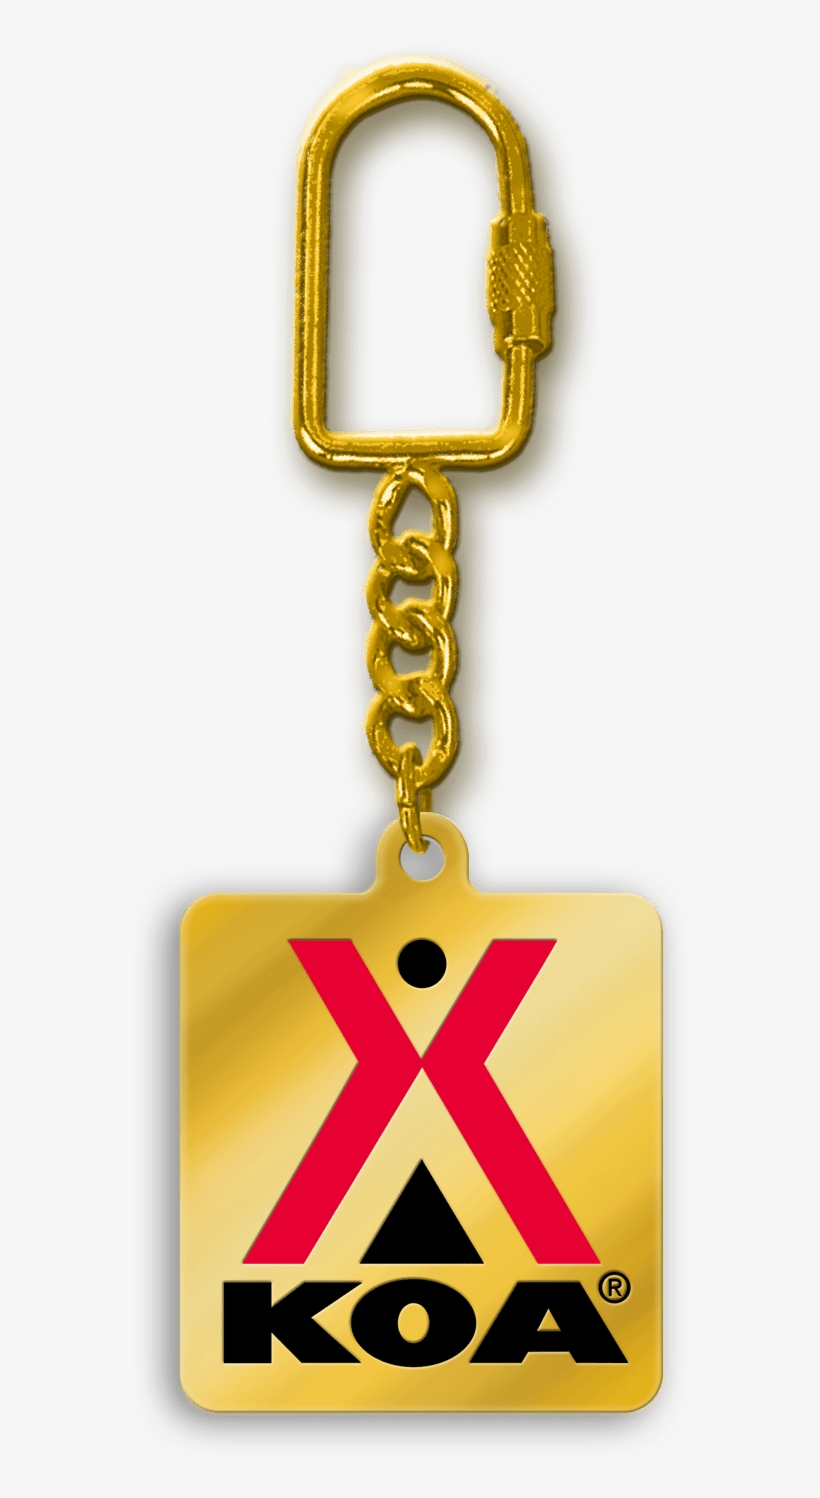 Koa Key Chain - Keychain, transparent png #4195164